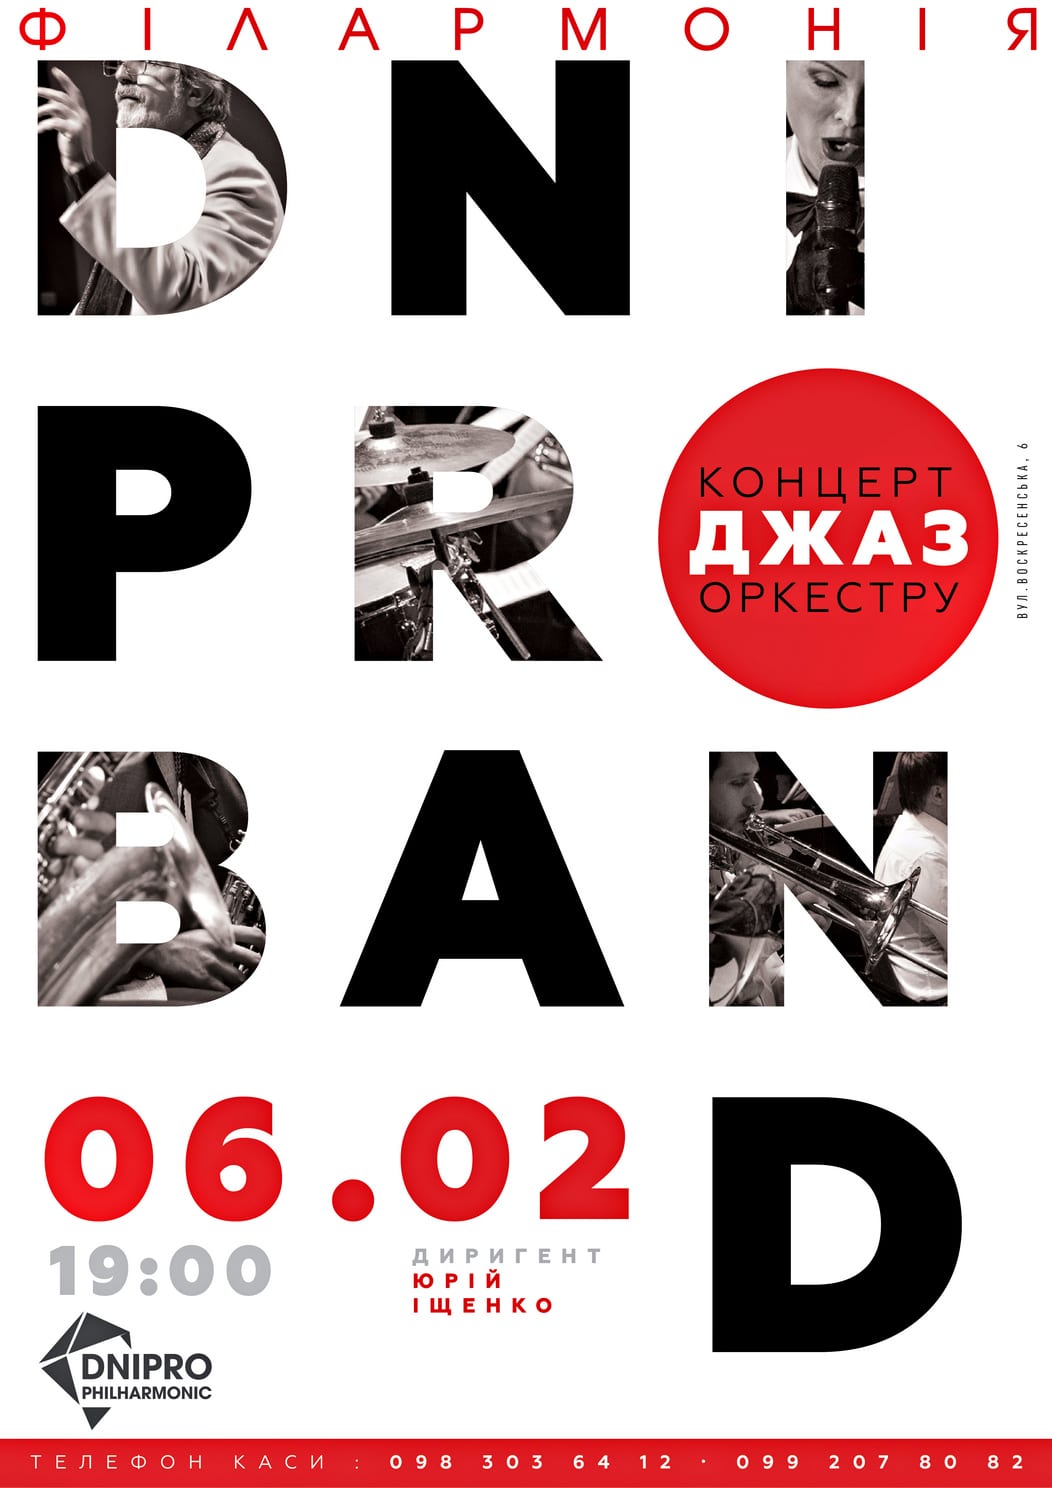 Концерт джаз-оркестра Dnipro Band Днепр, 06.02.2020, купить билеты. Афиша Днепра